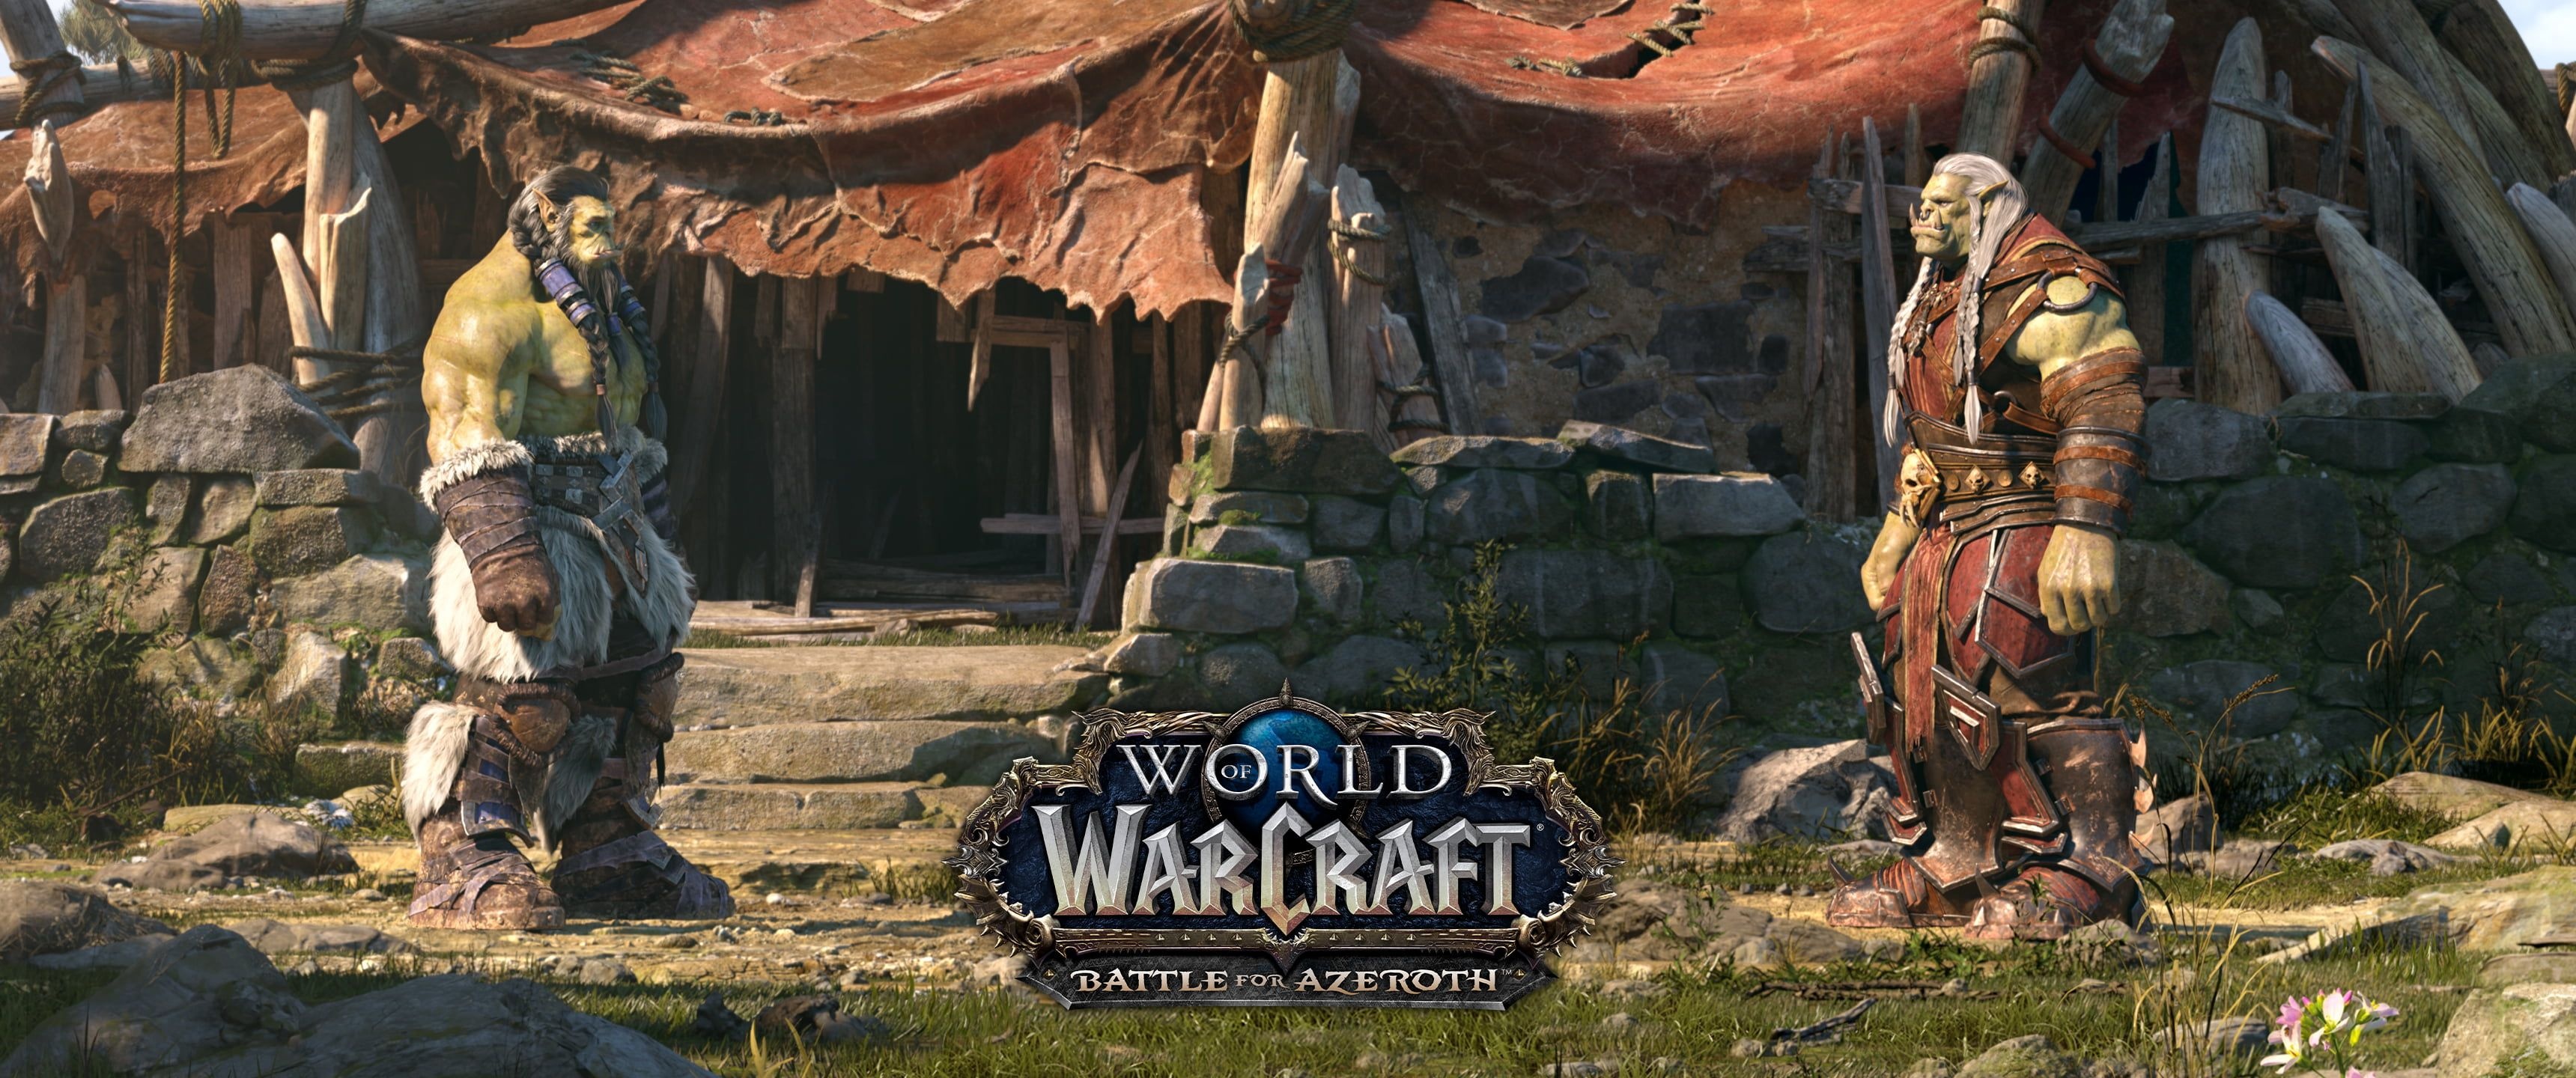 Battle for Azeroth, Horde (WOW) Wallpaper, 3440x1440 Dual Screen Desktop